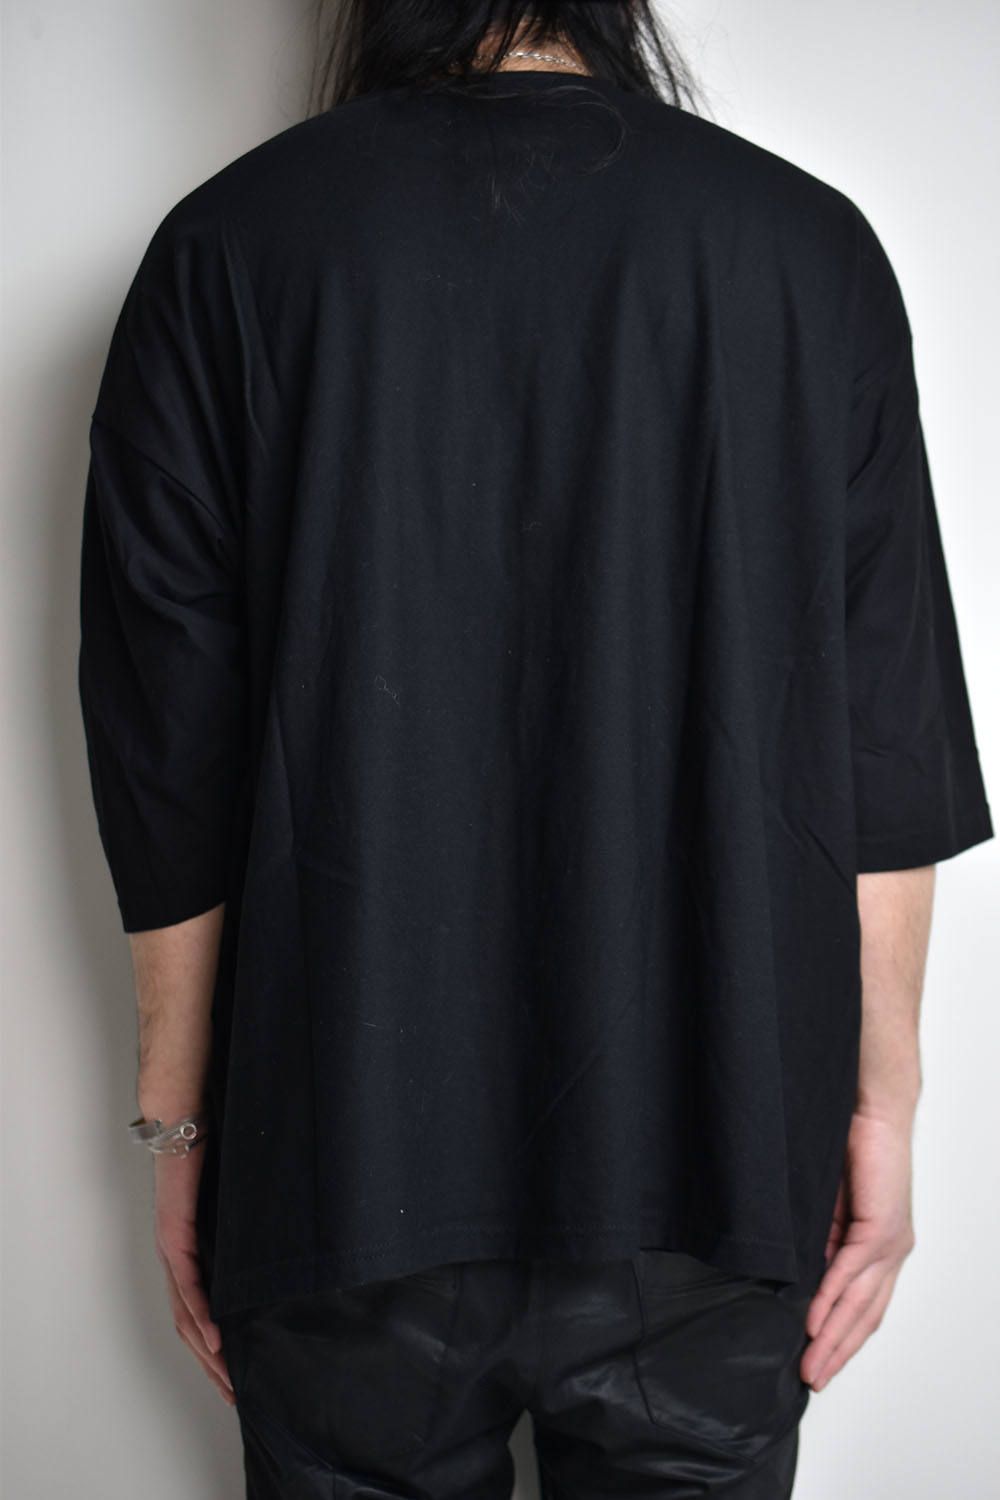 Loose Fit M/S T-Shirt"Black"ルーズフィットミディアムスリーブTee"ブラック"